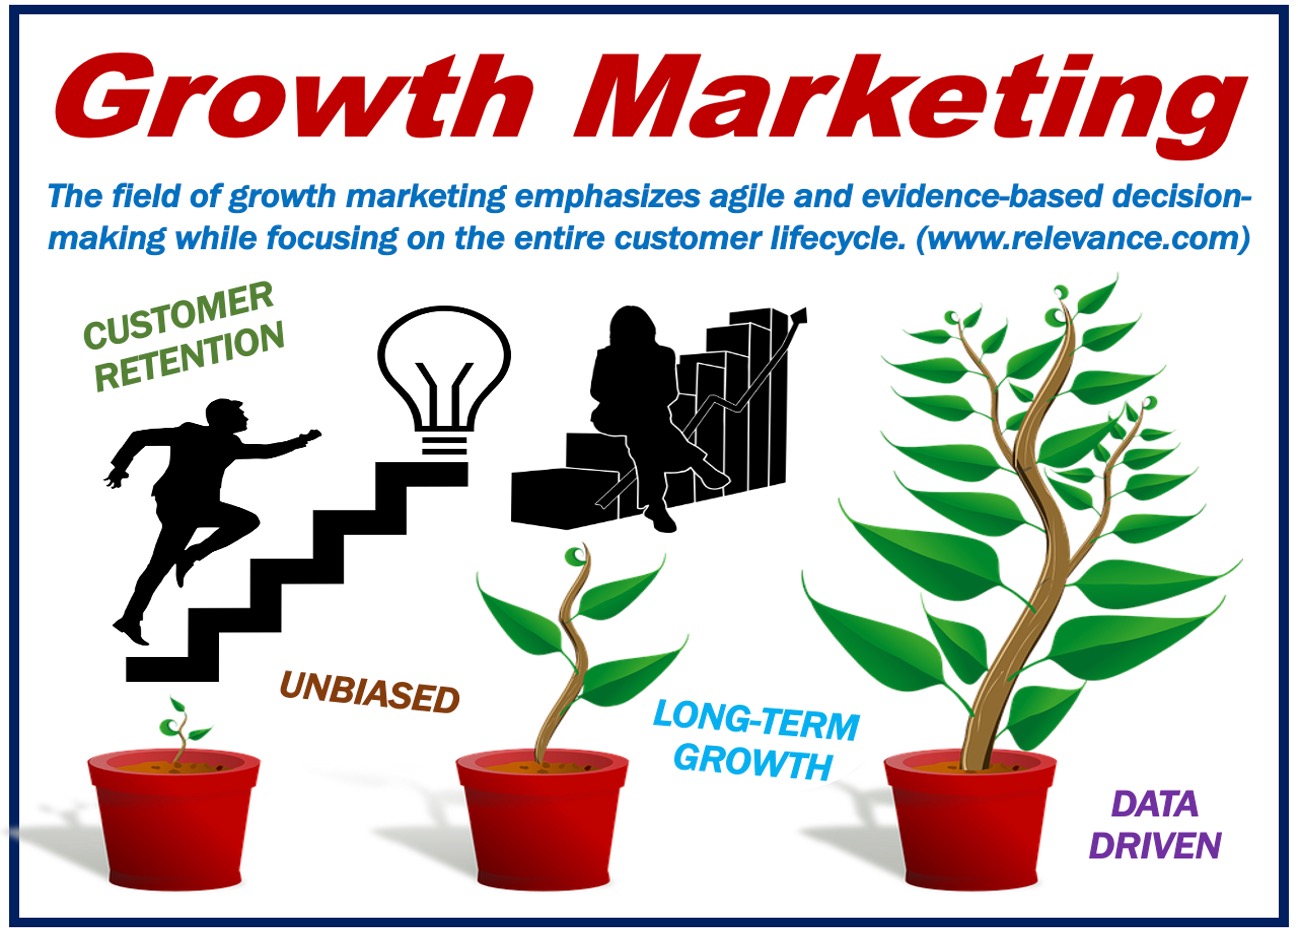 Growth Marketing Image